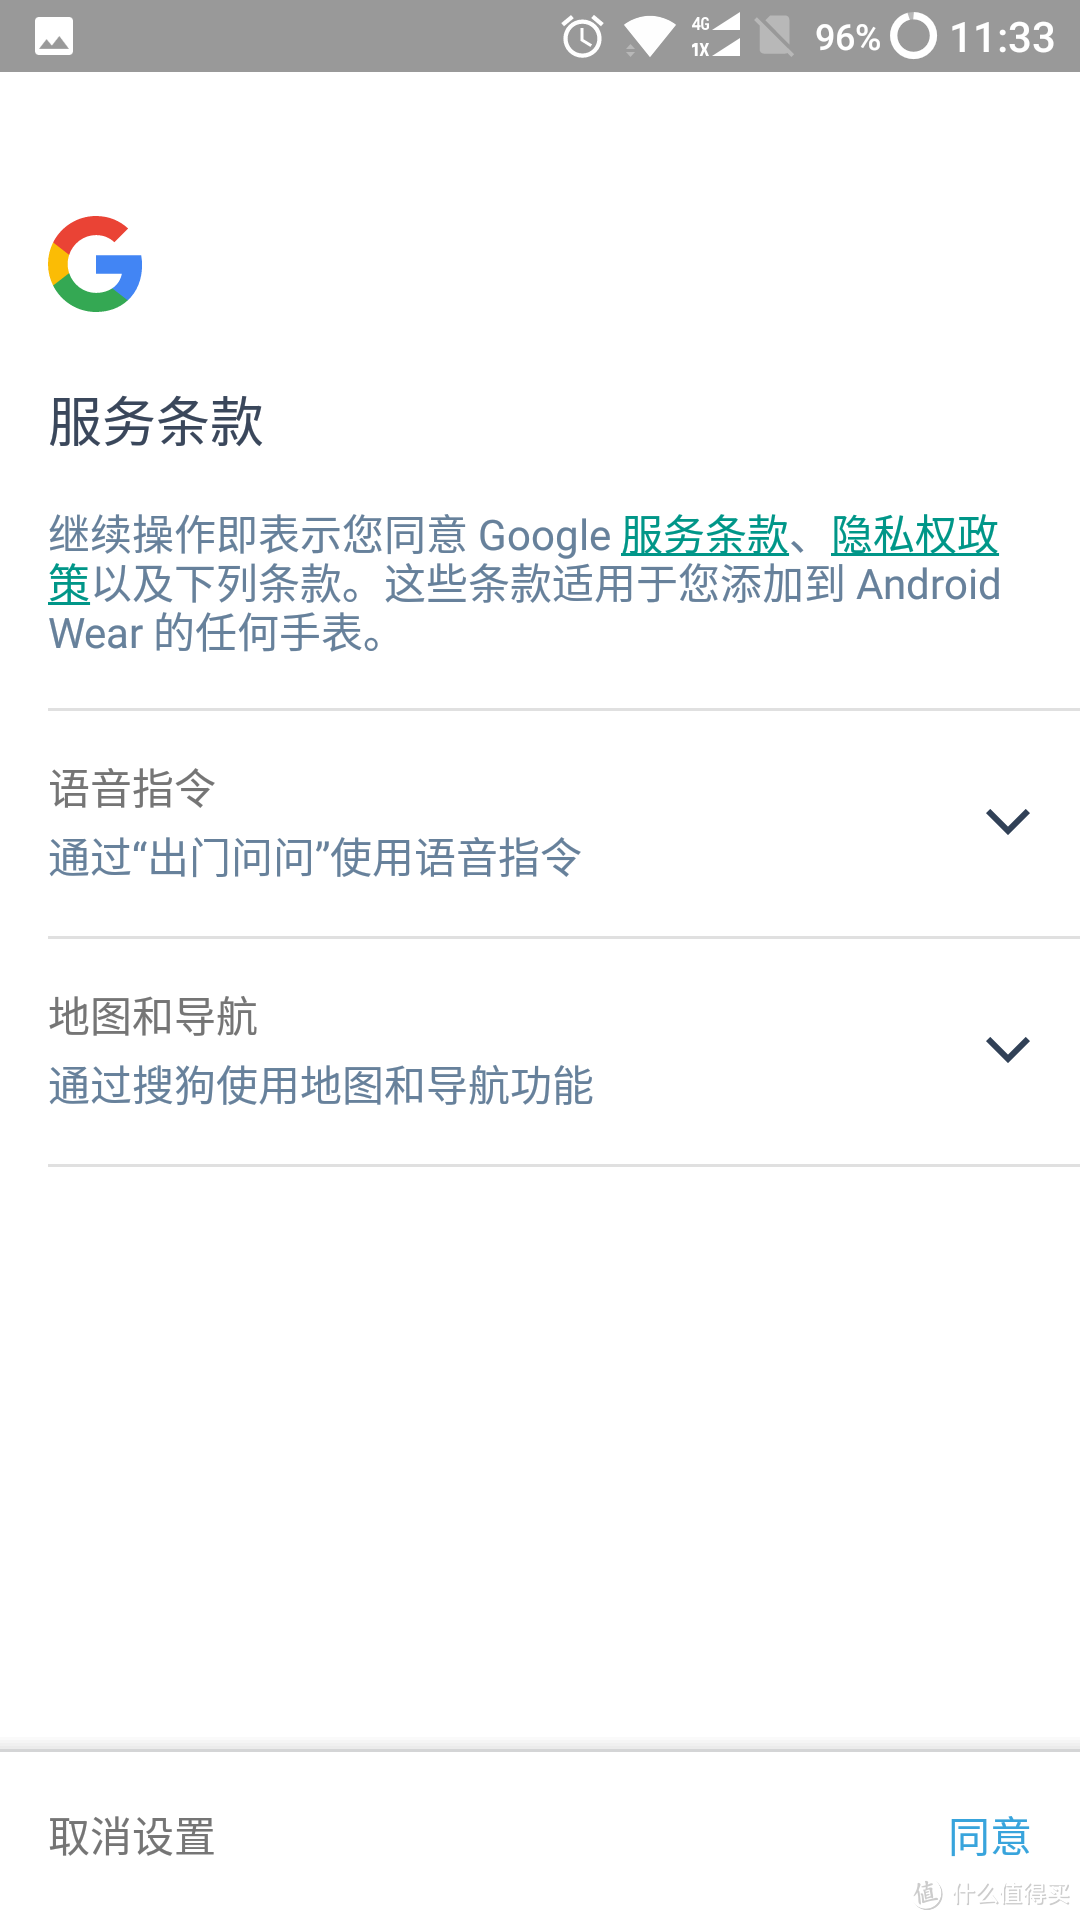 需要下载Android Wear 中国版